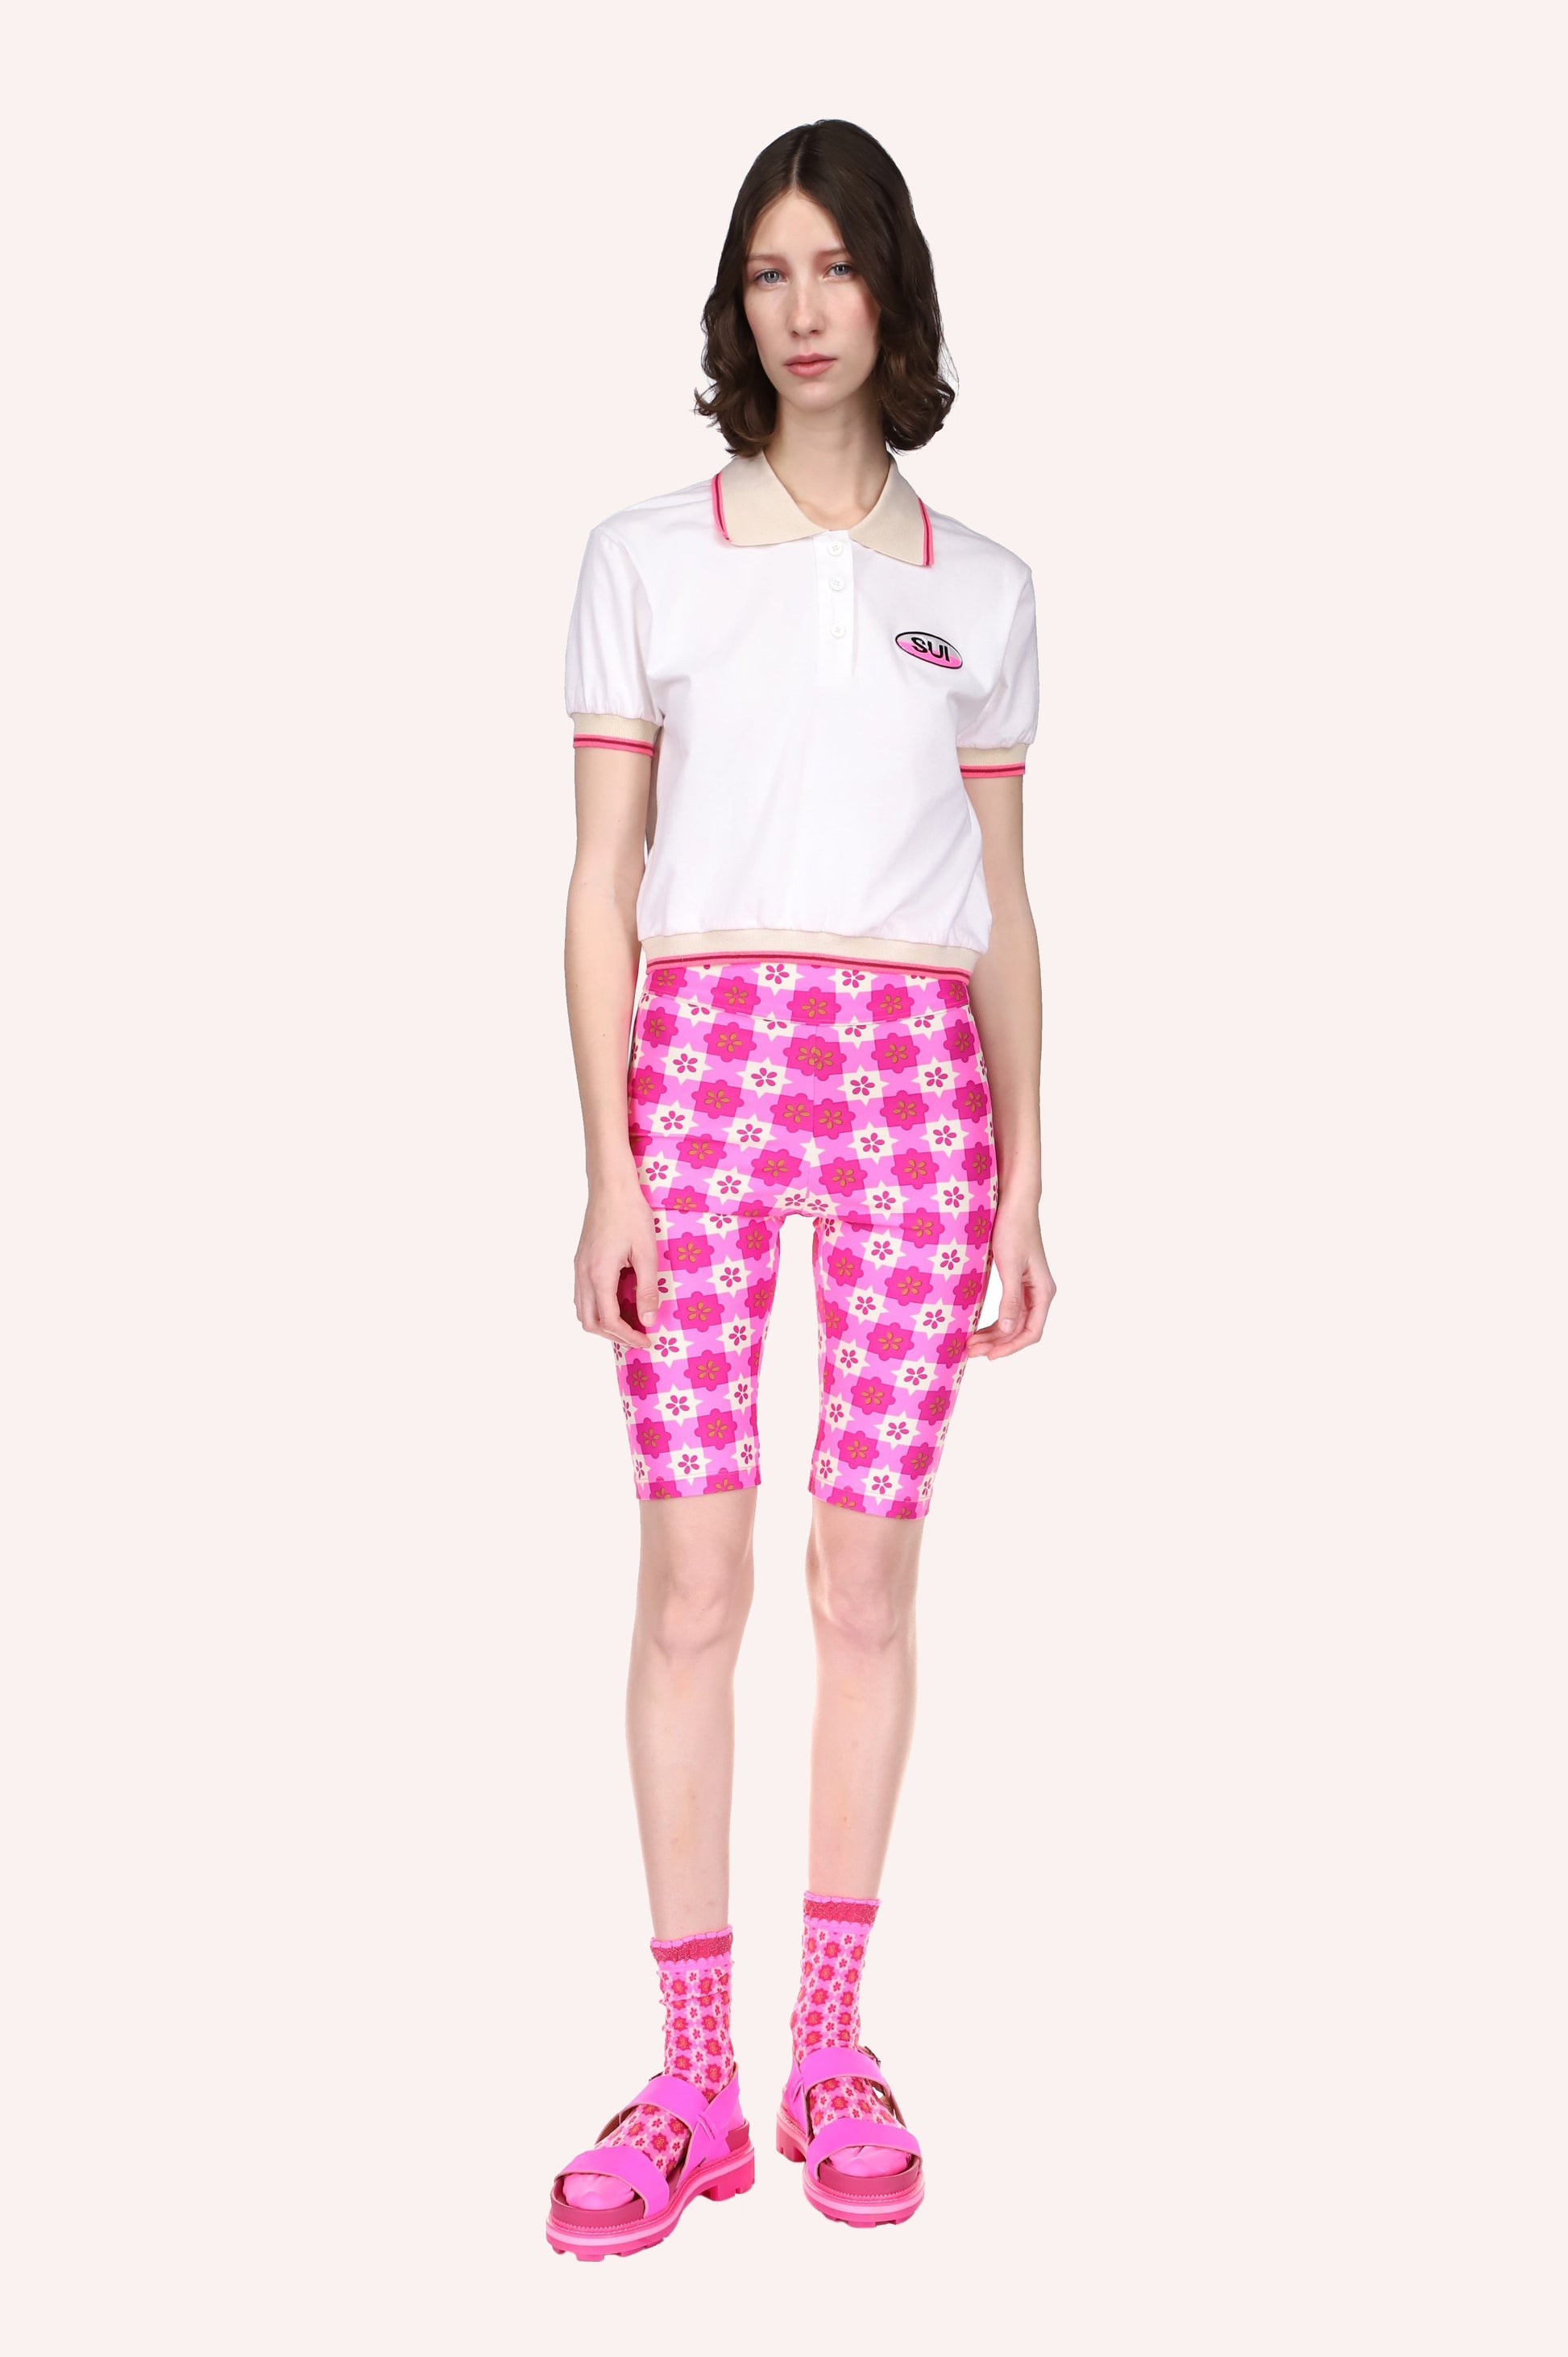 Deco Polo Top Neon Pink, est parfaitement assorti au Utopian Gingham Bike Shorts Neon Pink